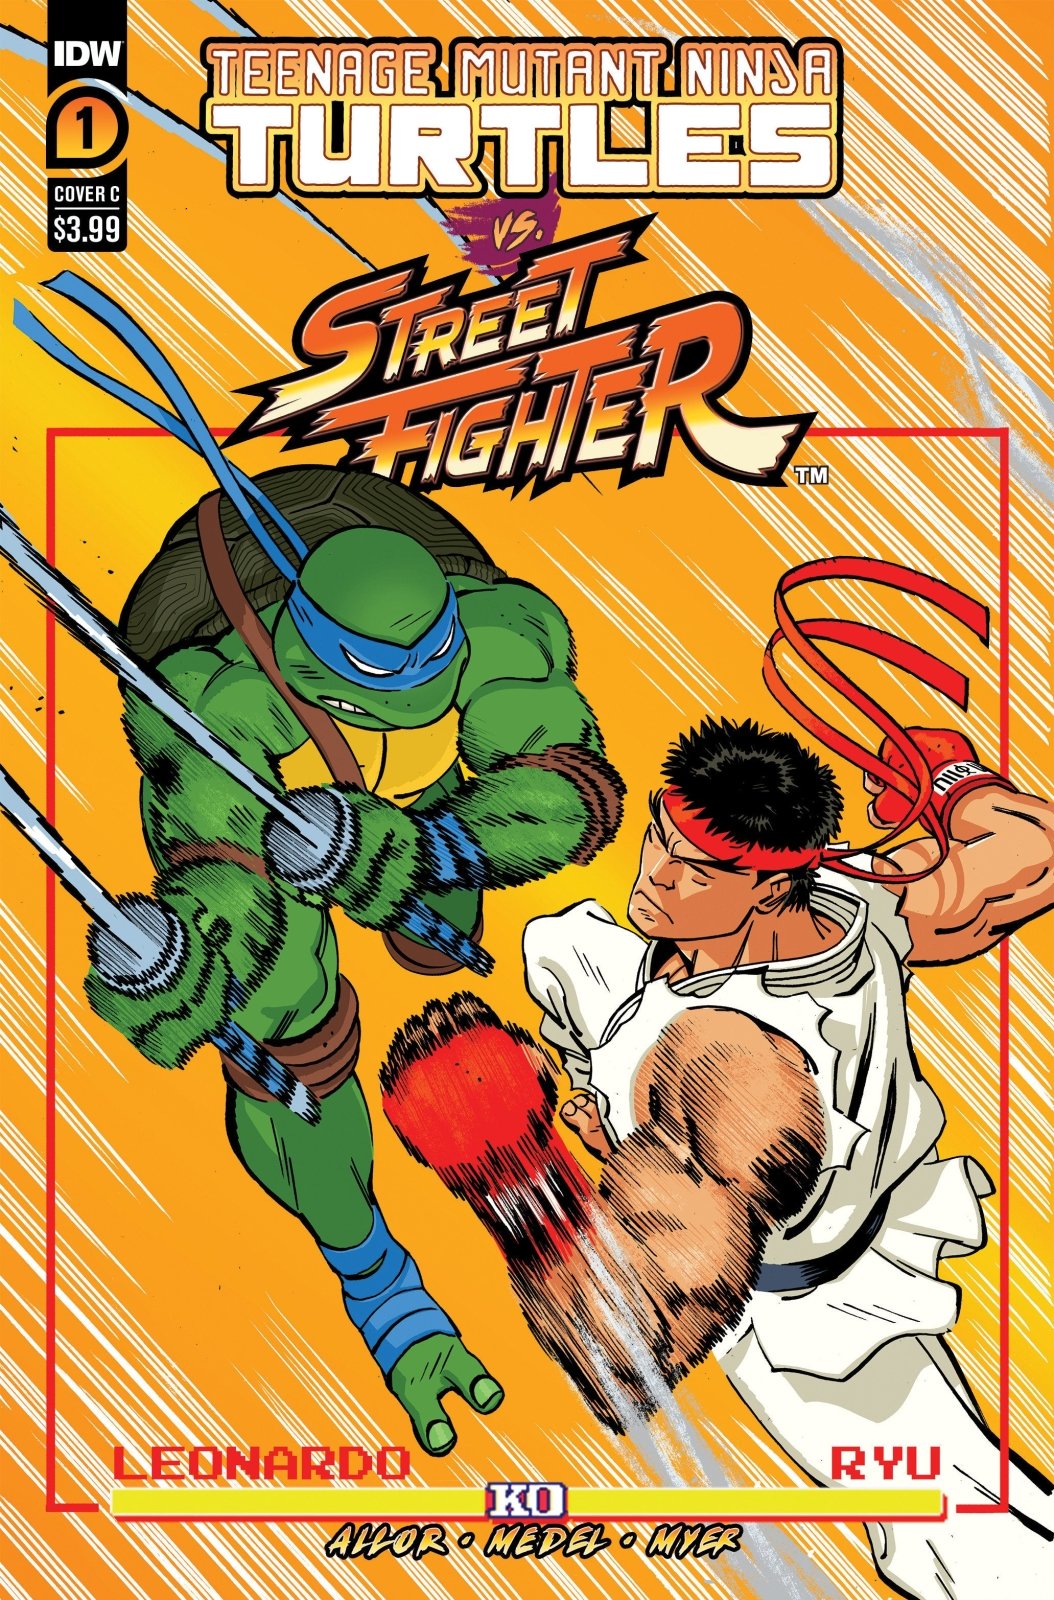 Teenage Mutant Ninja Turtles vs. Street Fighter #1 Variant C (Reilly) - The Fourth Place